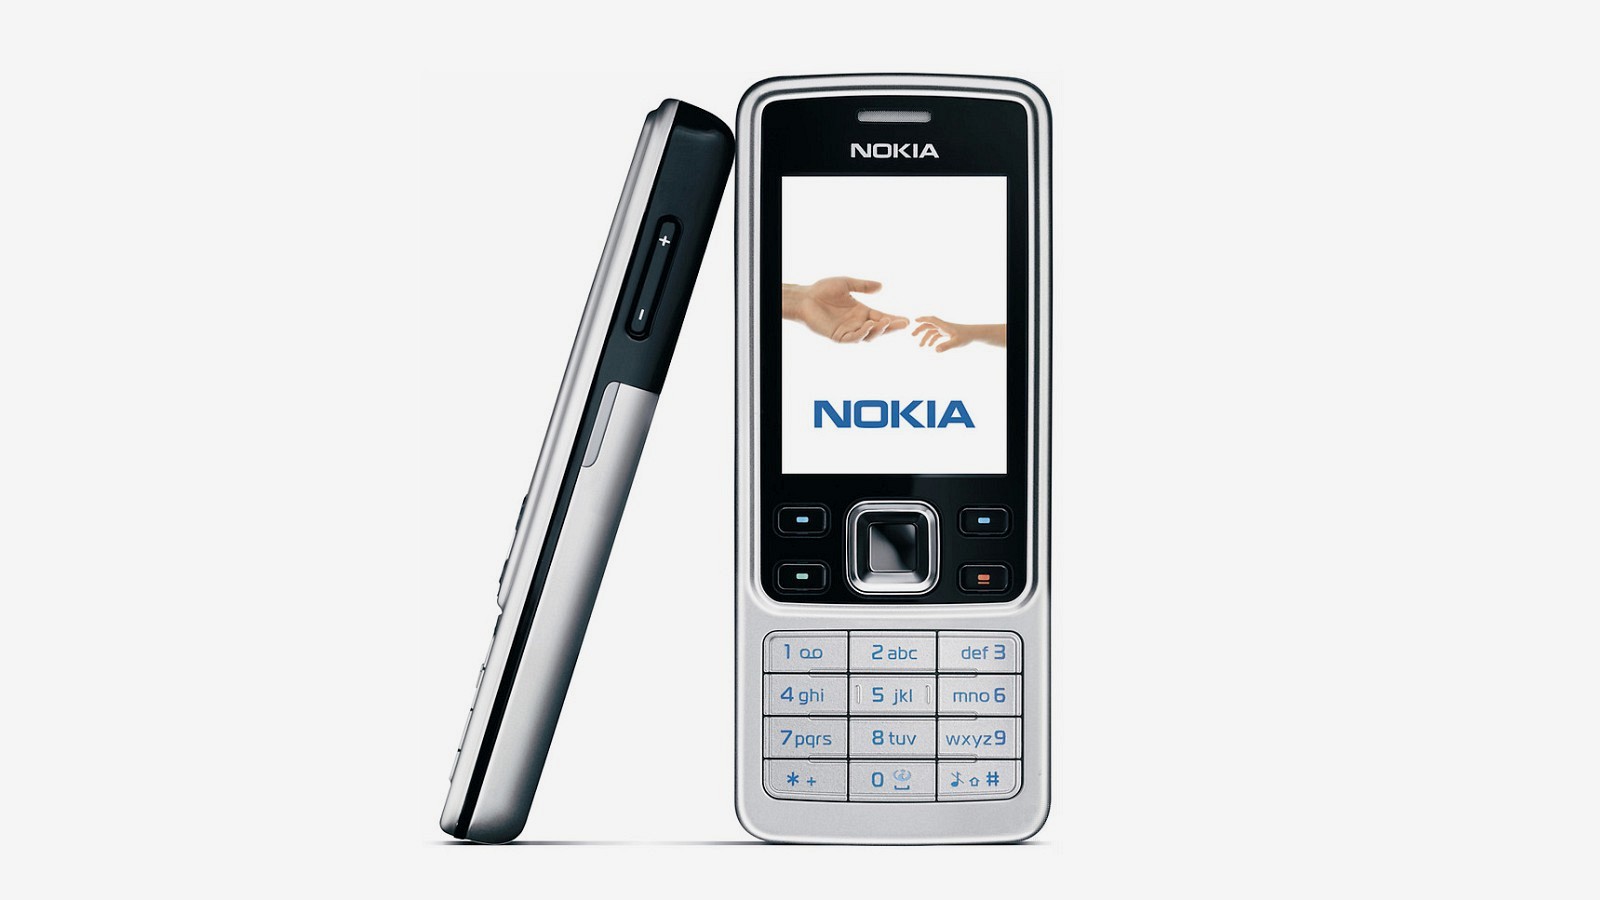 Картинка телефона нокиа. Нокиа 6300 4g. Nokia 6300 2005. Нокиа 6300 Классик. Nokia 6300 Nokia.